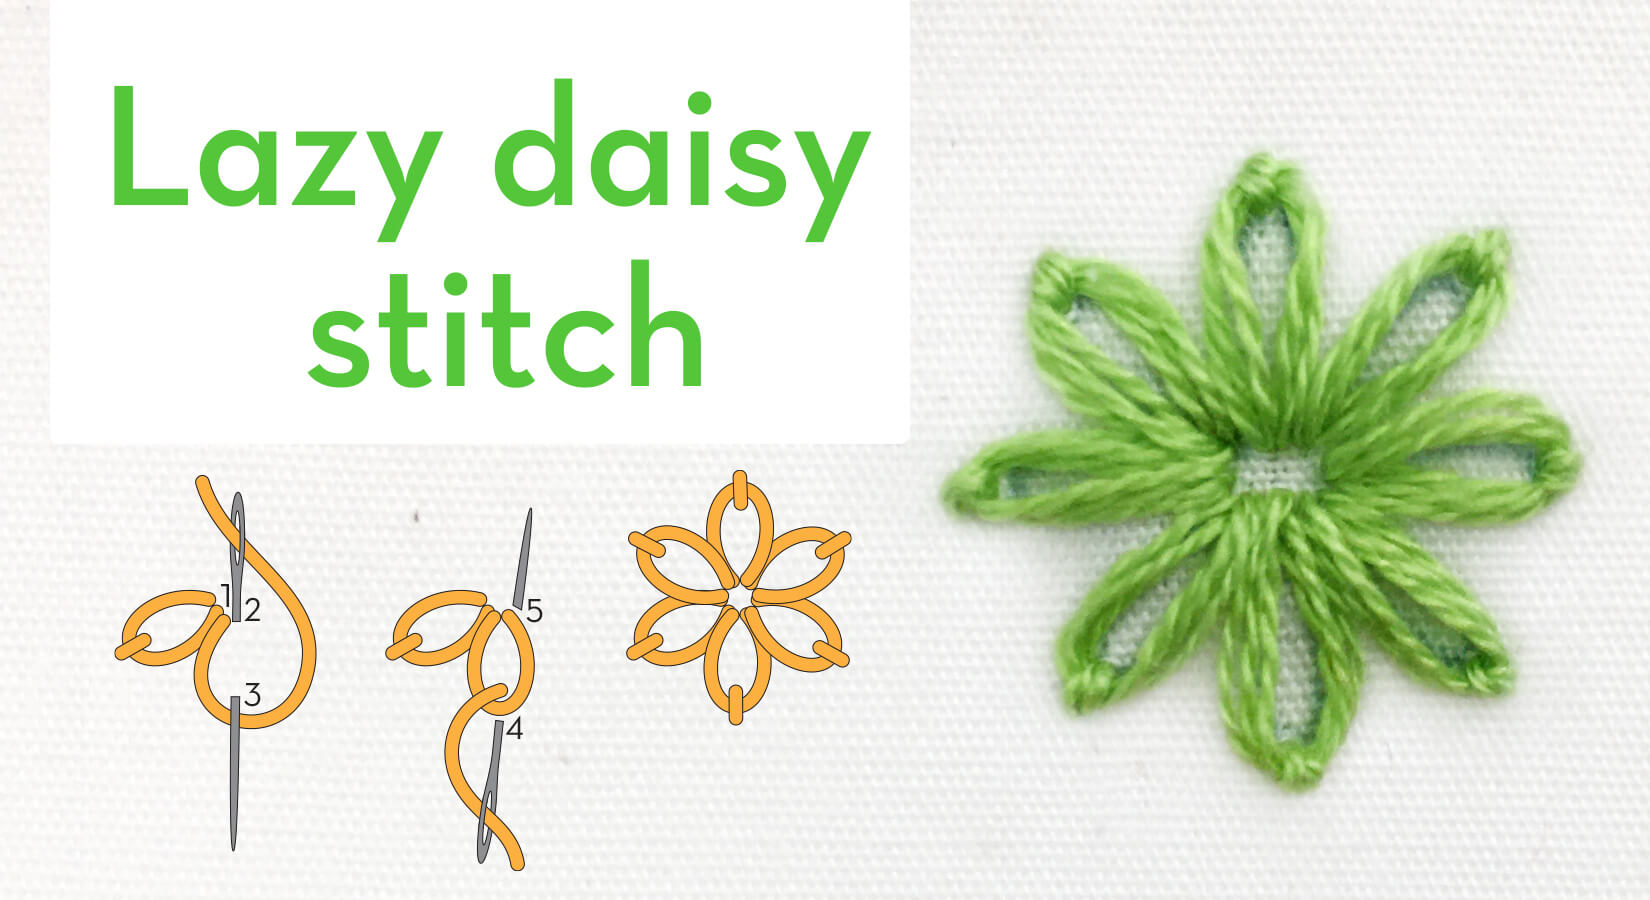 Lazy daisy stitch - embroidery stitches